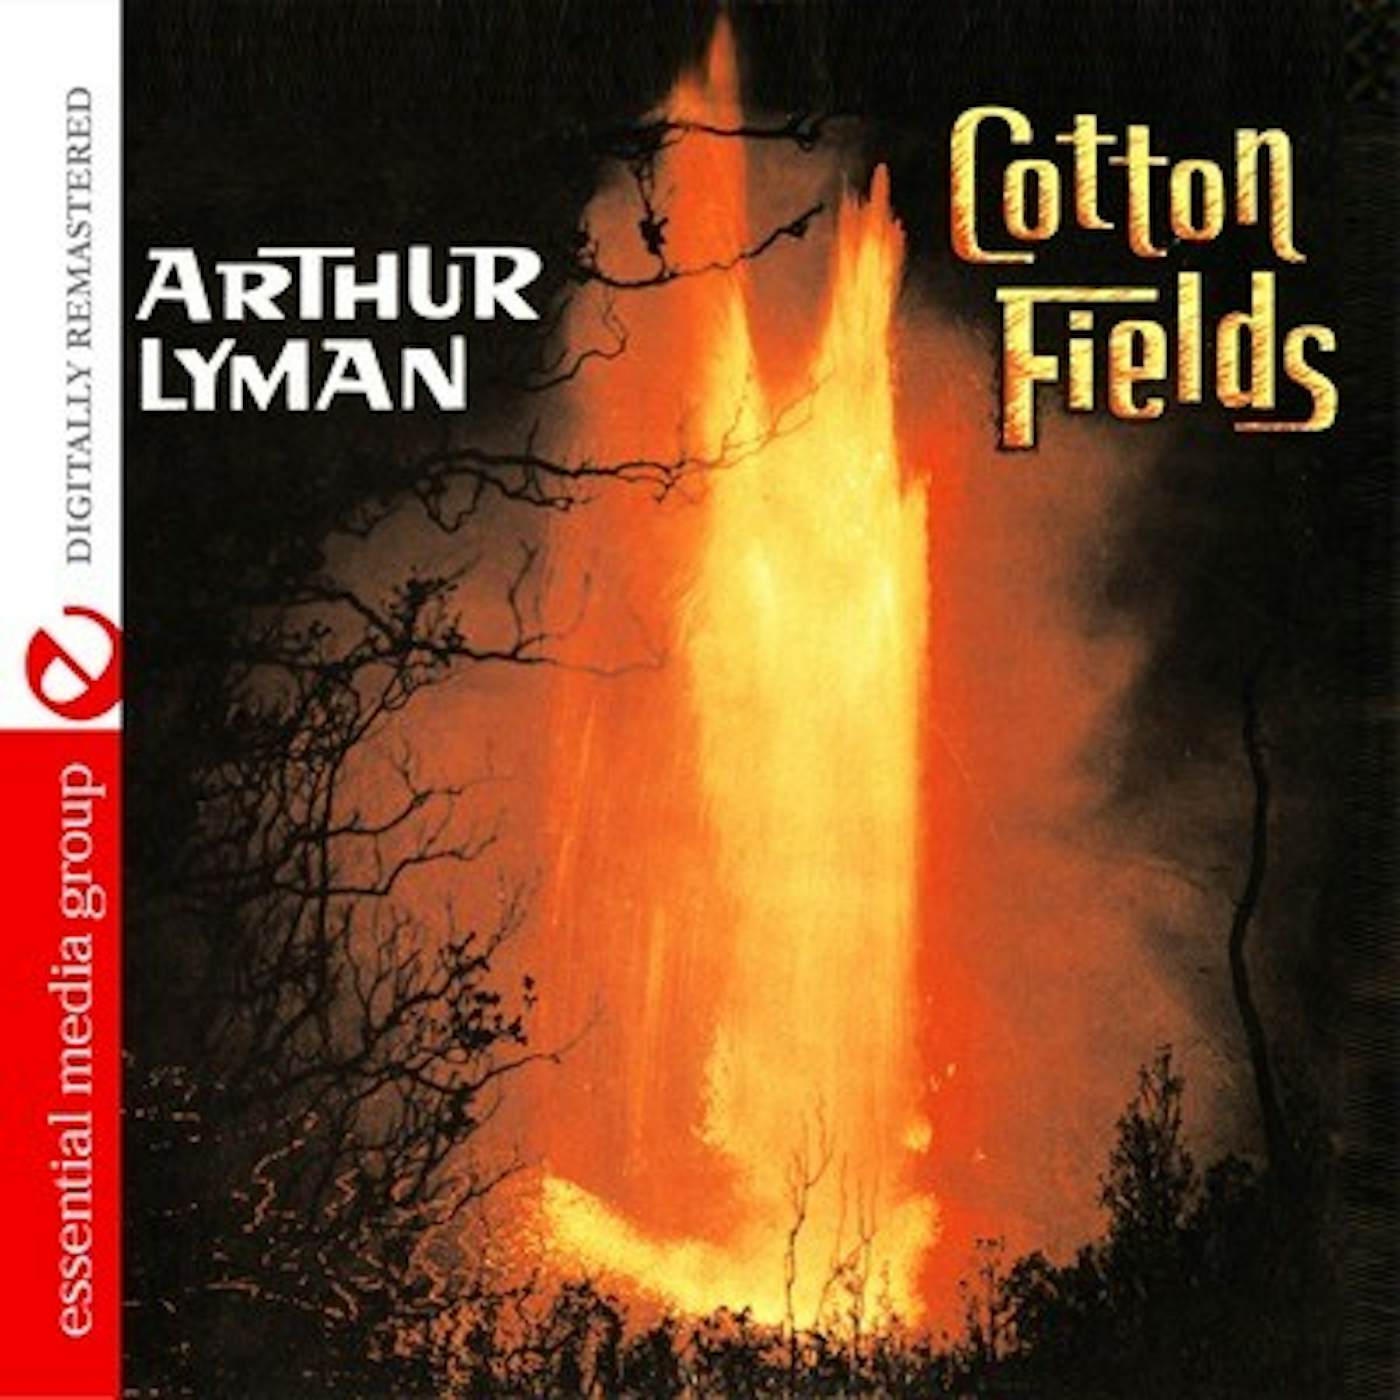 Arthur Lyman COTTON FIELDS CD